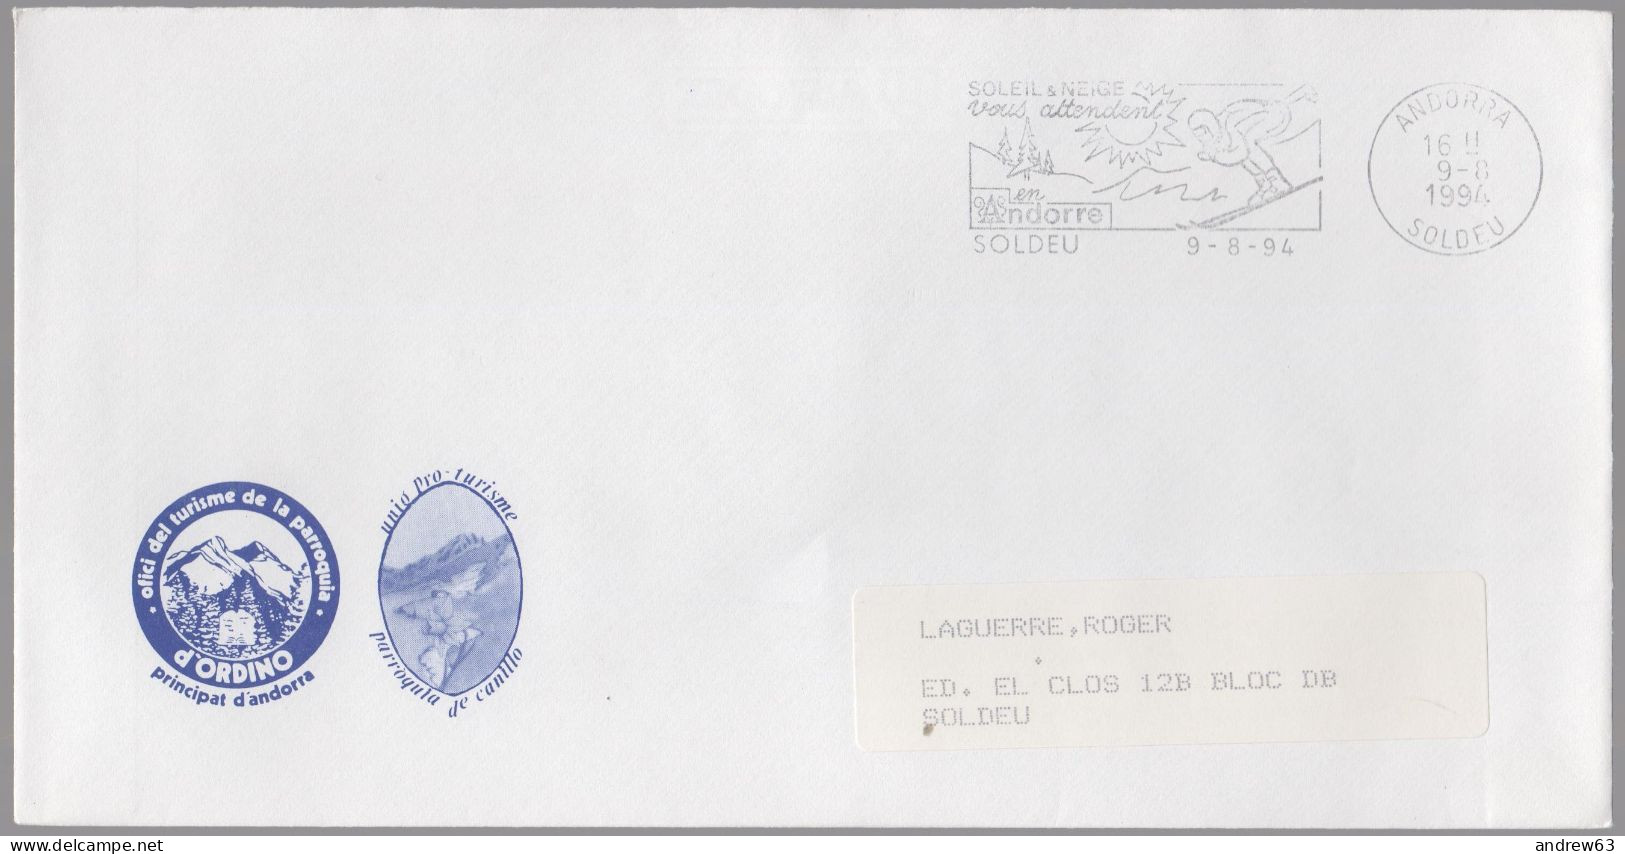 ANDORRA - ANDORRE - 1994 - Lettre En Franchise + Flamme - Viaggiata Da Soldeu Per Soldeu - Cartas & Documentos